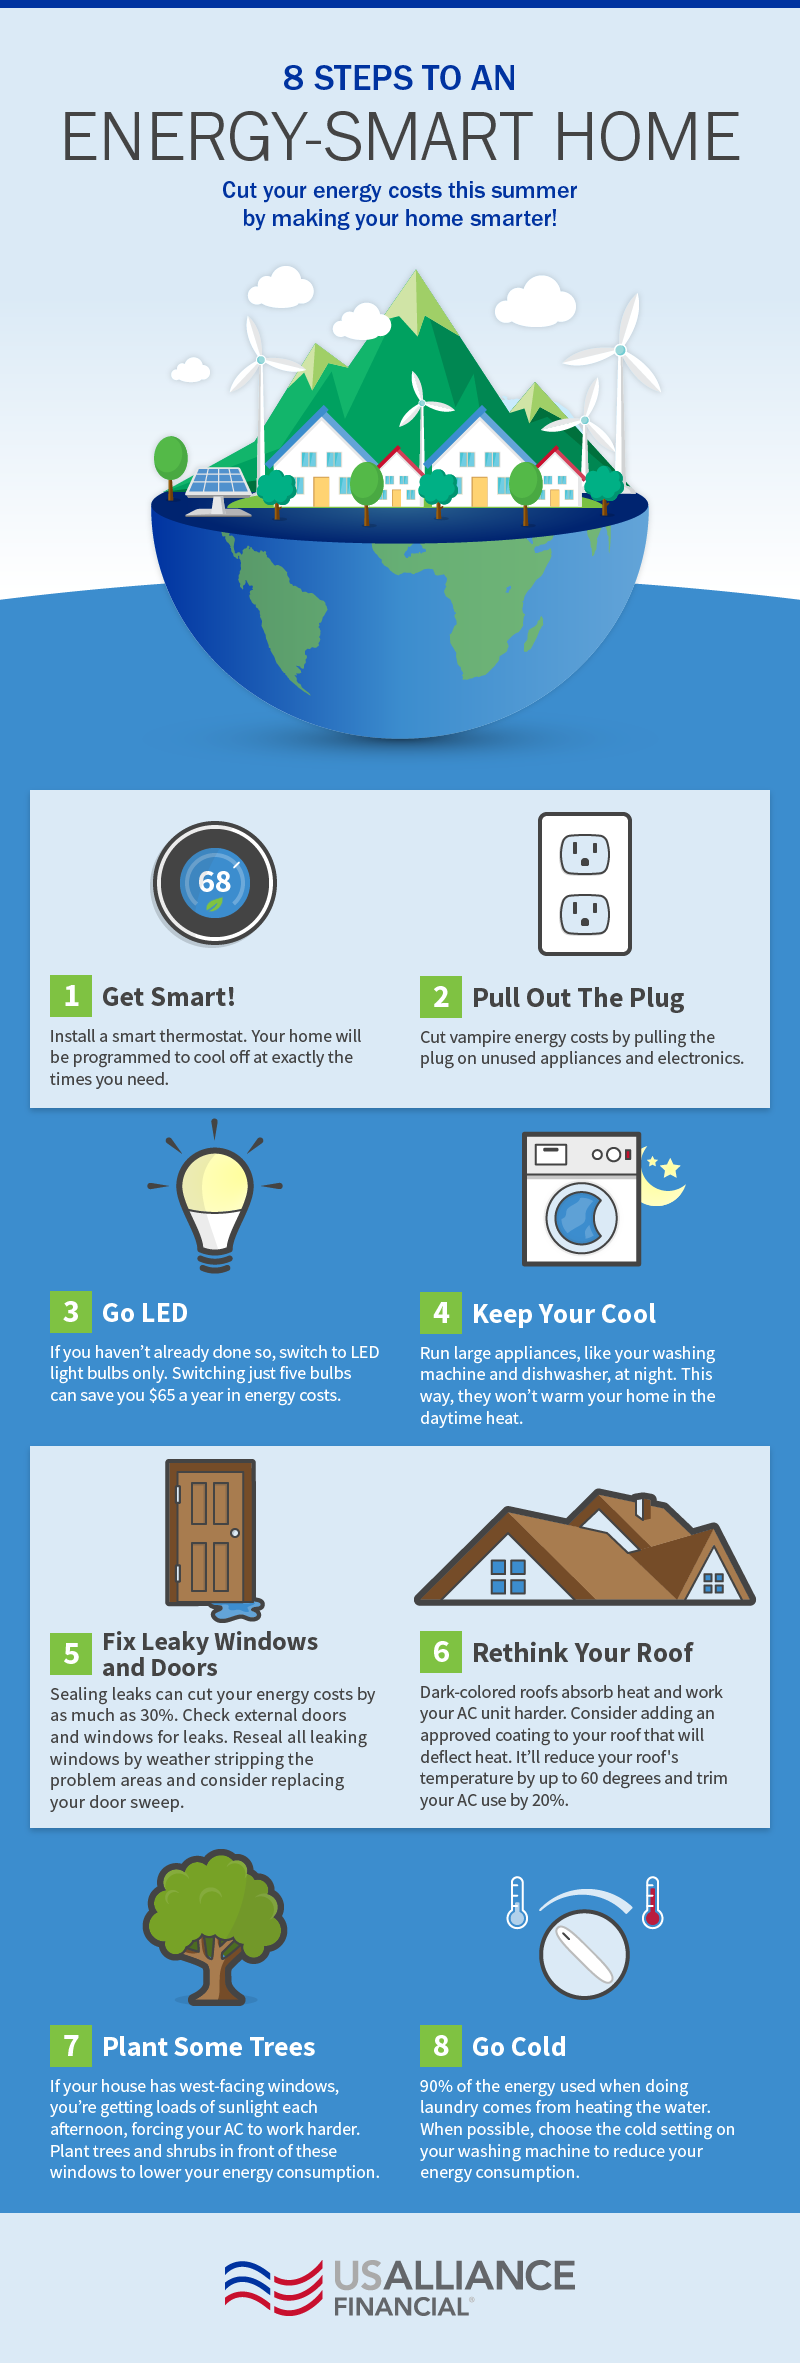 usalliance-energy-smart-home-infographic